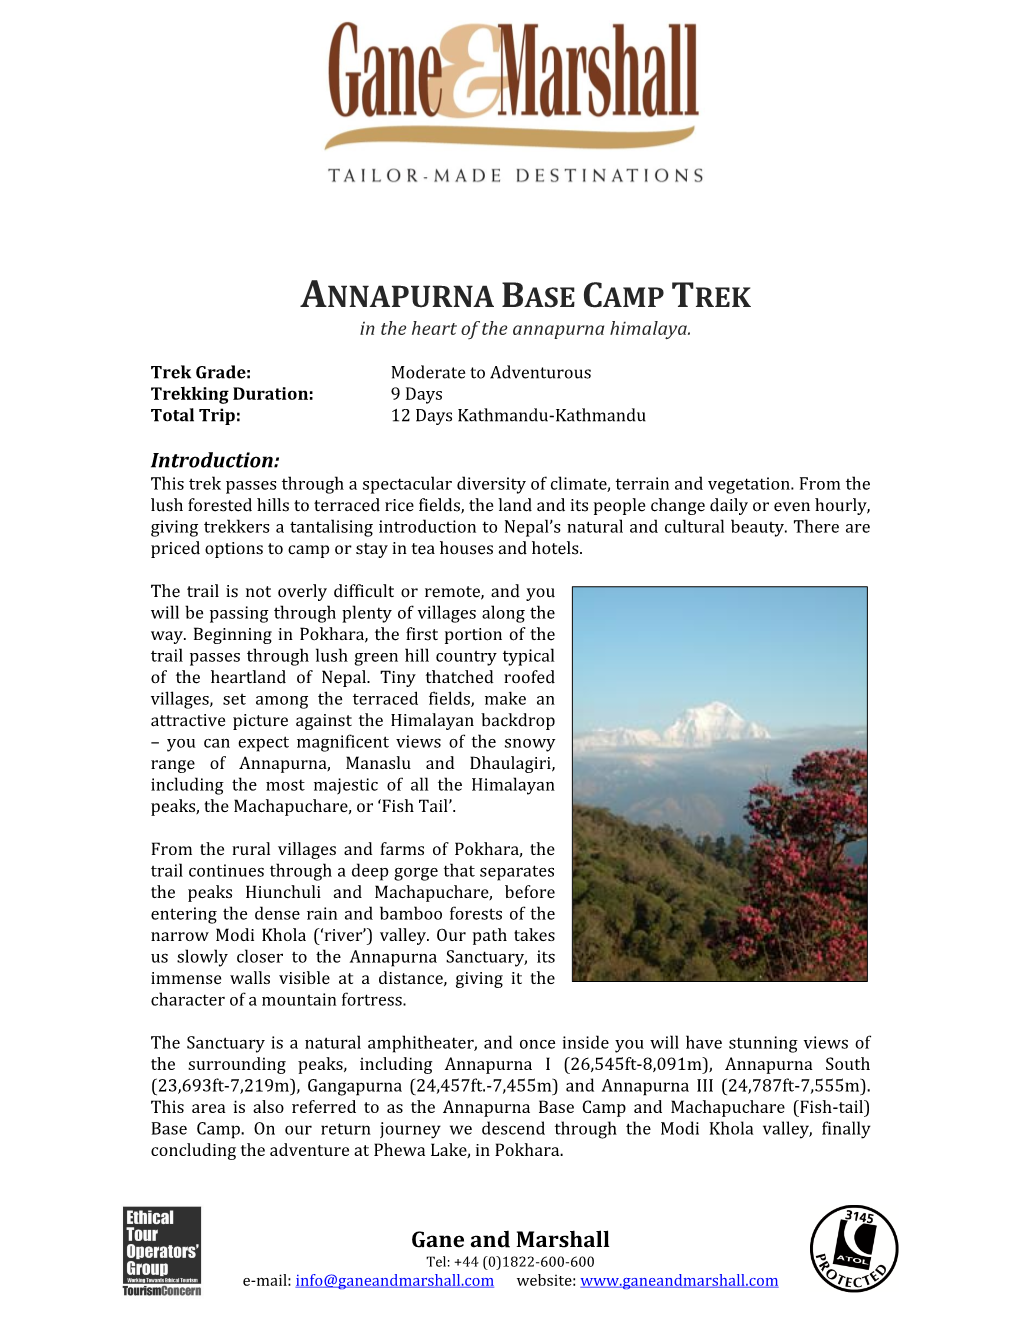 ANNAPURNA BASE CAMP TREK in the Heart of the Annapurna Himalaya